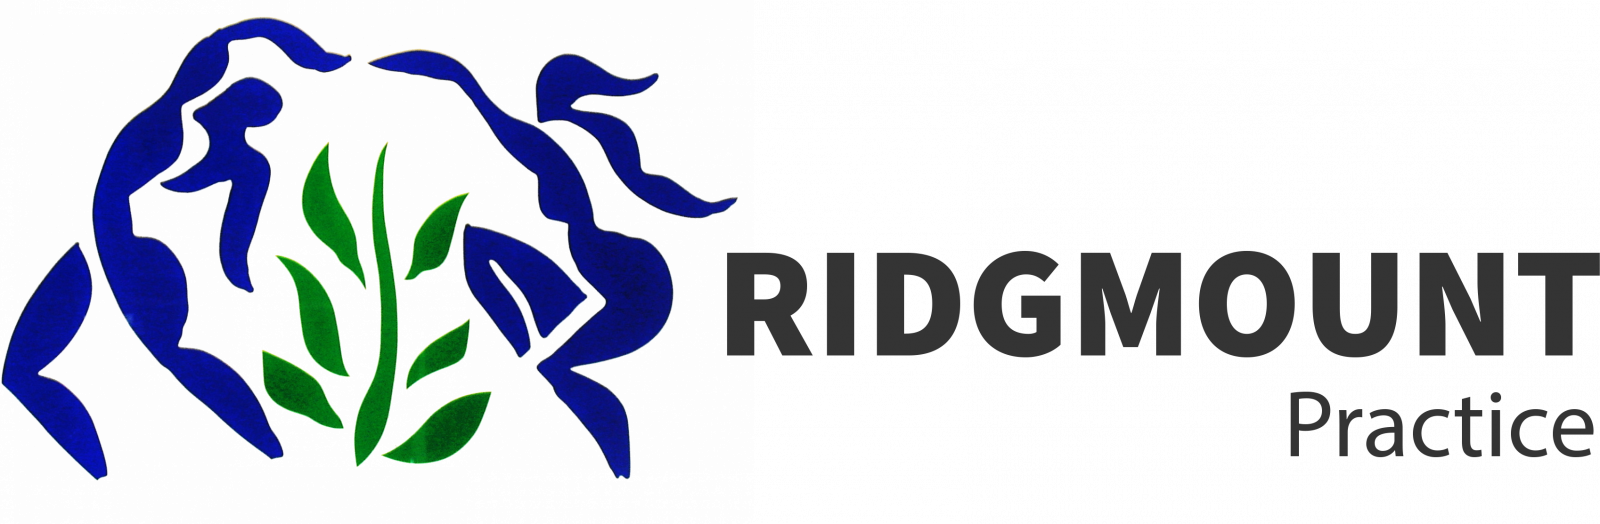 Ridgmount Practice logo